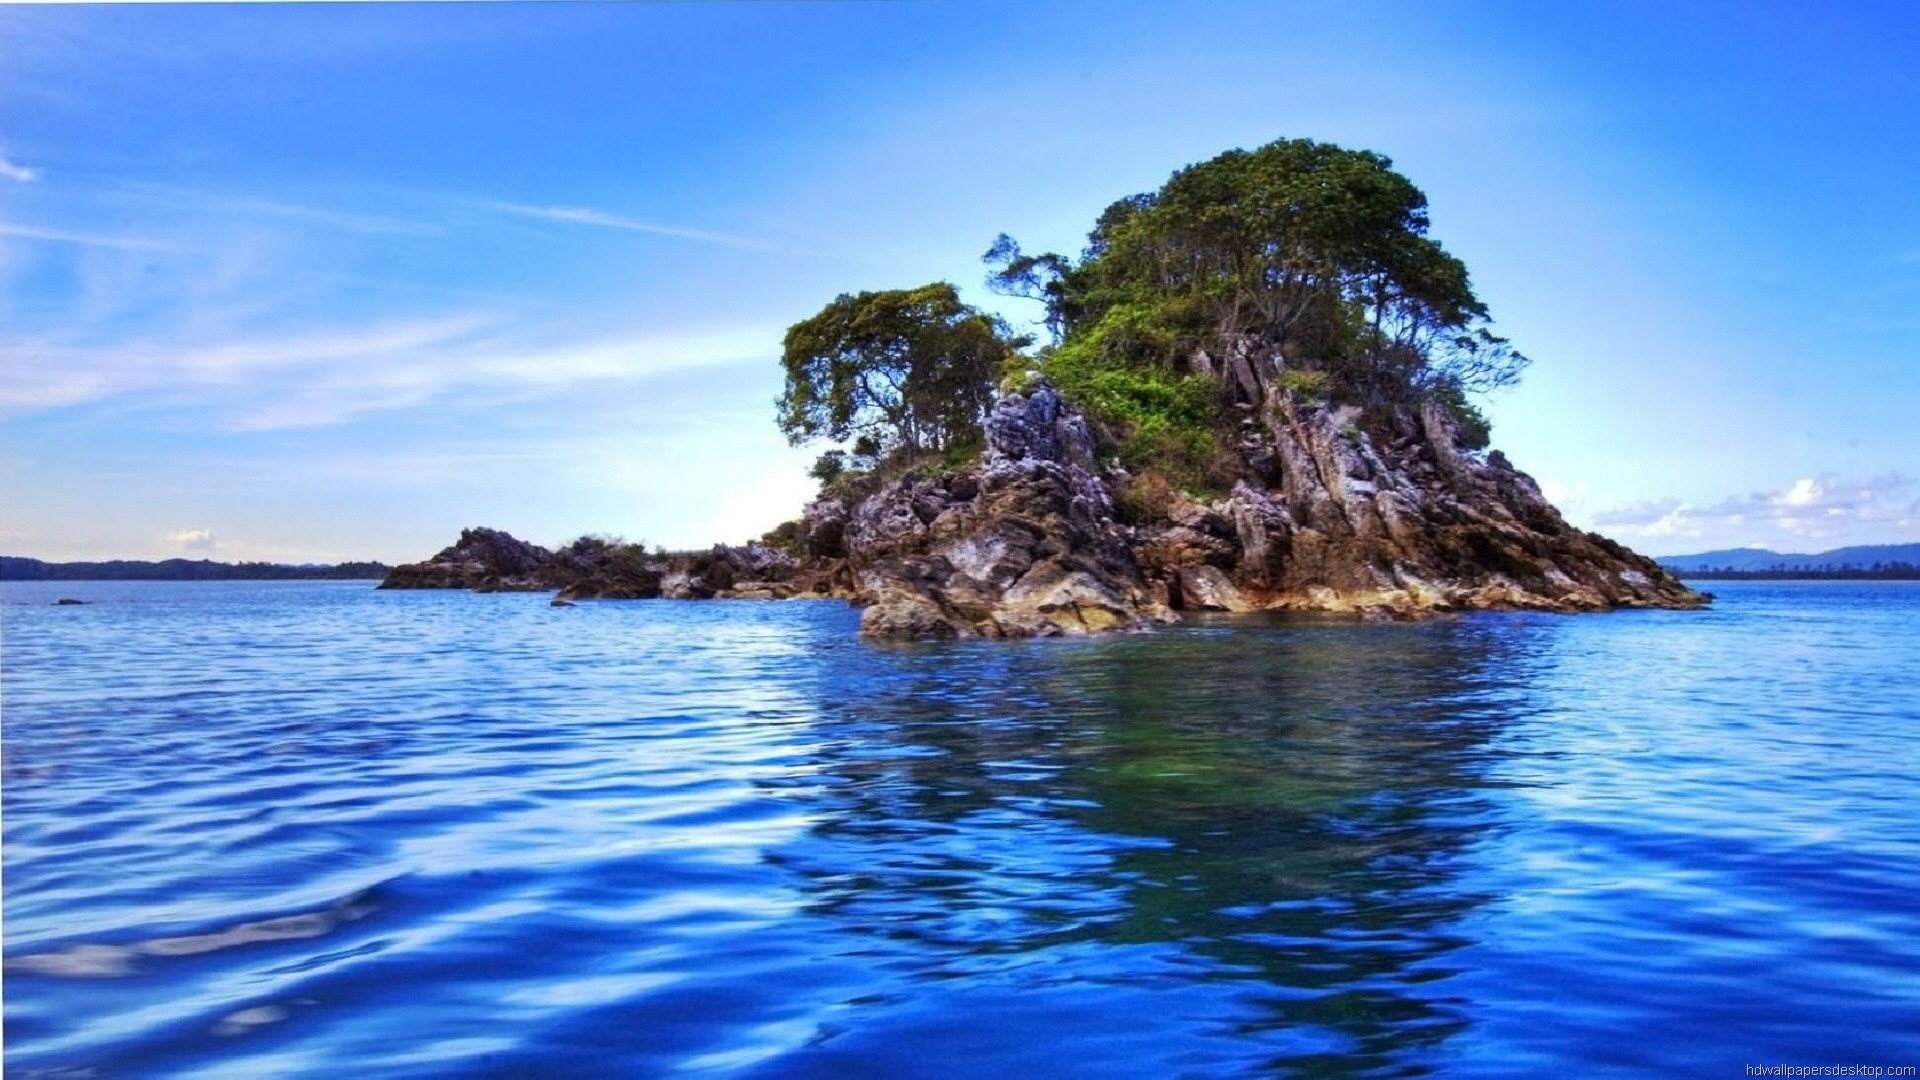 natural images hd wallpaper desktop background,body of water,natural landscape,nature,sea,islet